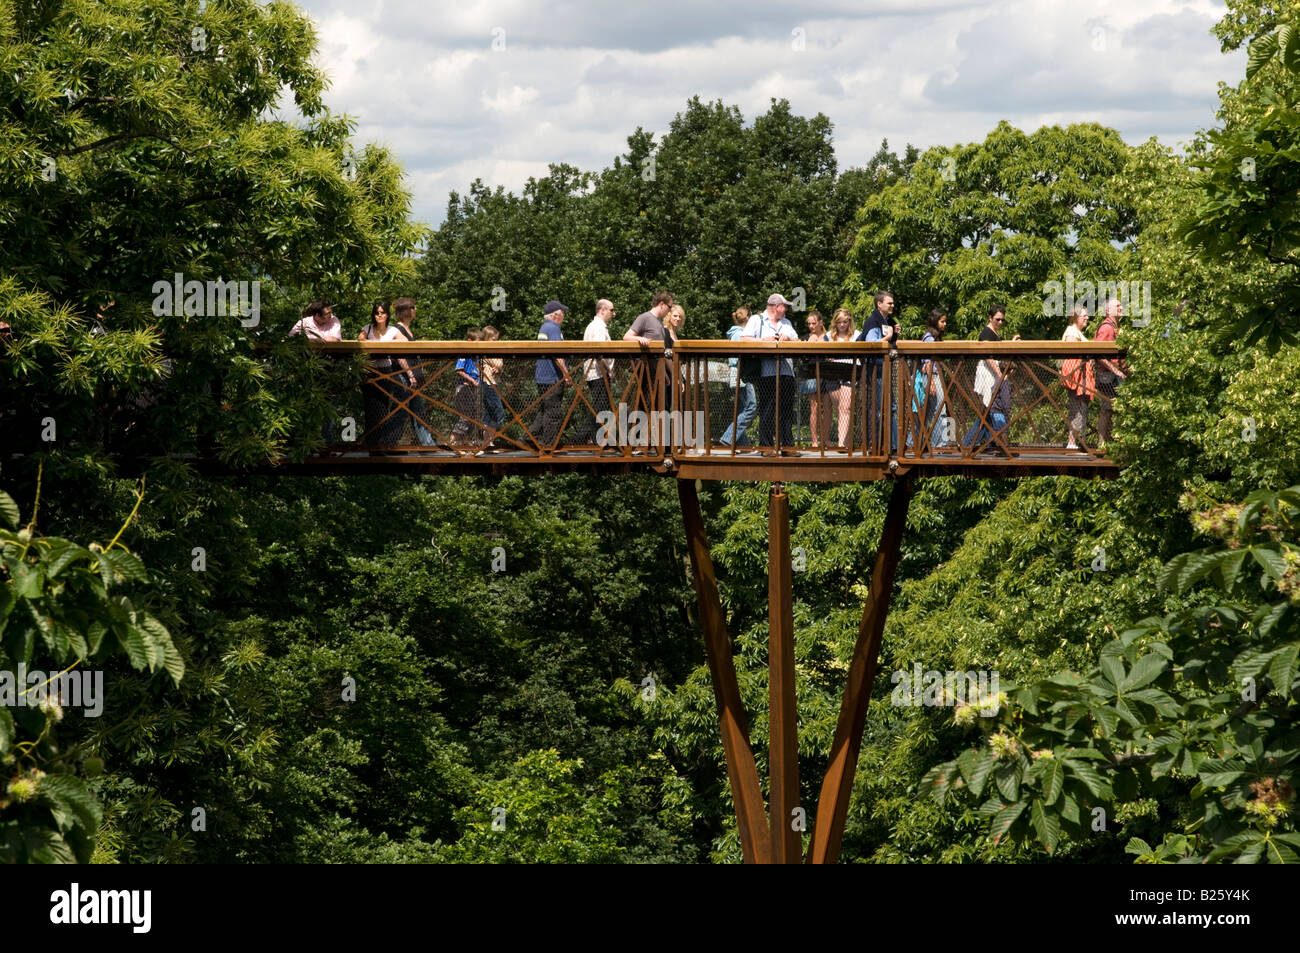 Xstrata Treetop Walkway in Kew Gardens, London, England UK Stockfoto